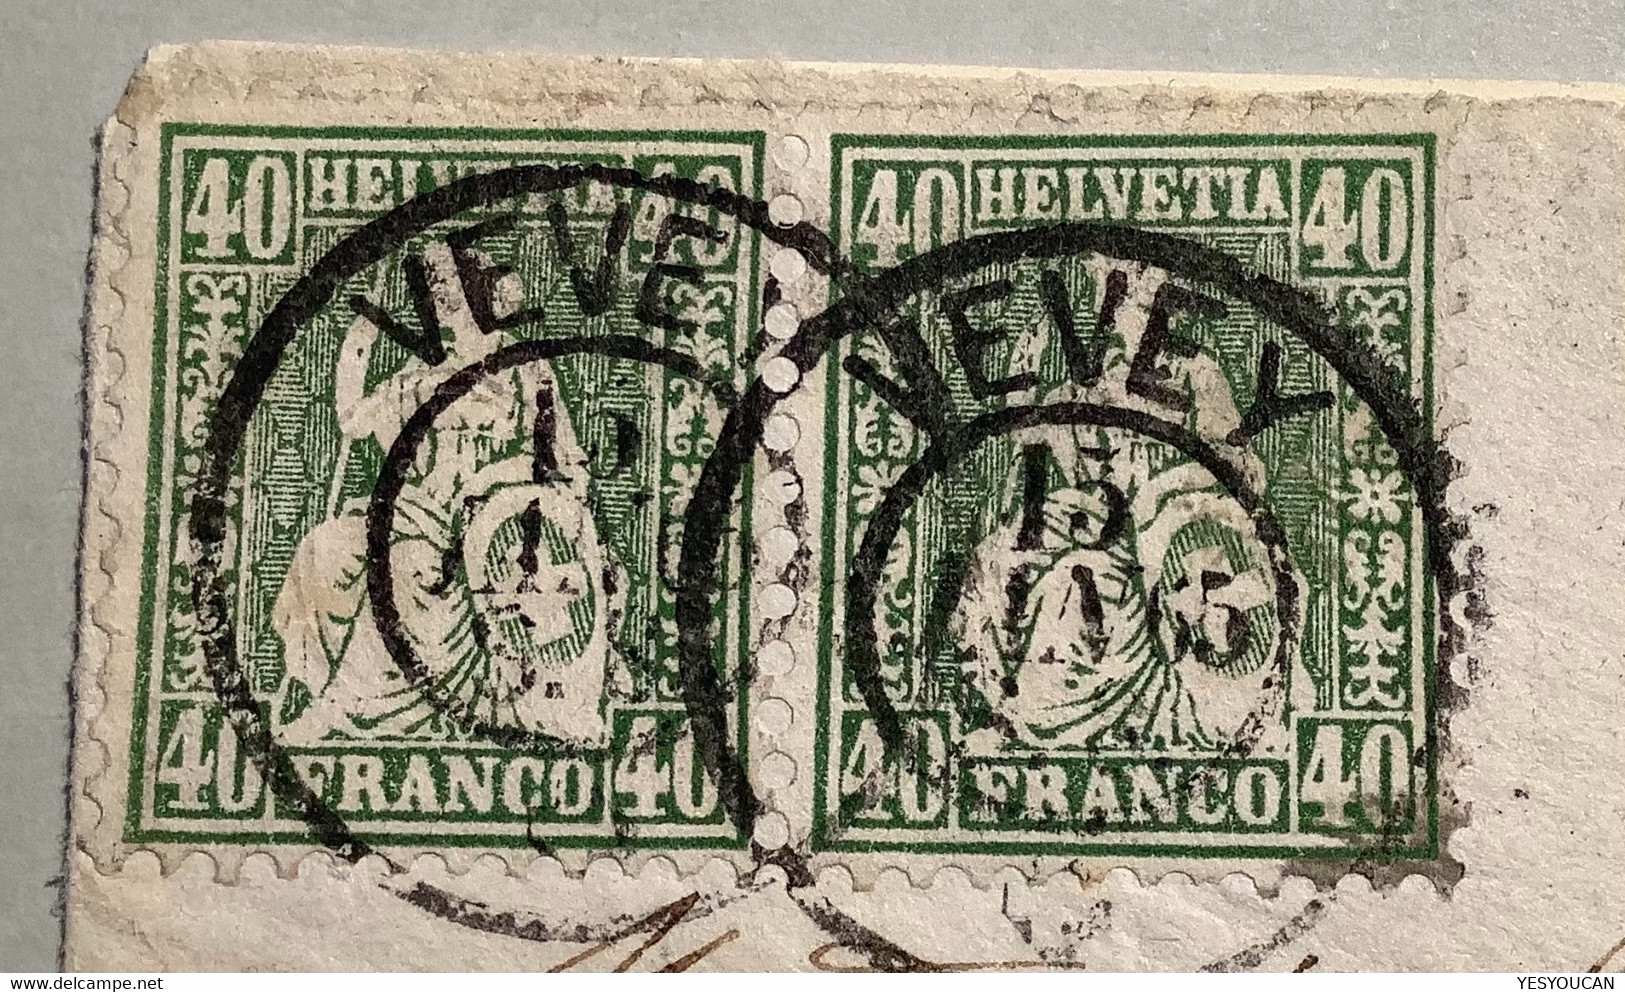 VEVEY 1865 (VD) Brief>Cannes Alpes Maritimes France, ZNr34 X2 1862 Sitzende Helvetia (Schweiz Suisse Lettre Cover - Covers & Documents